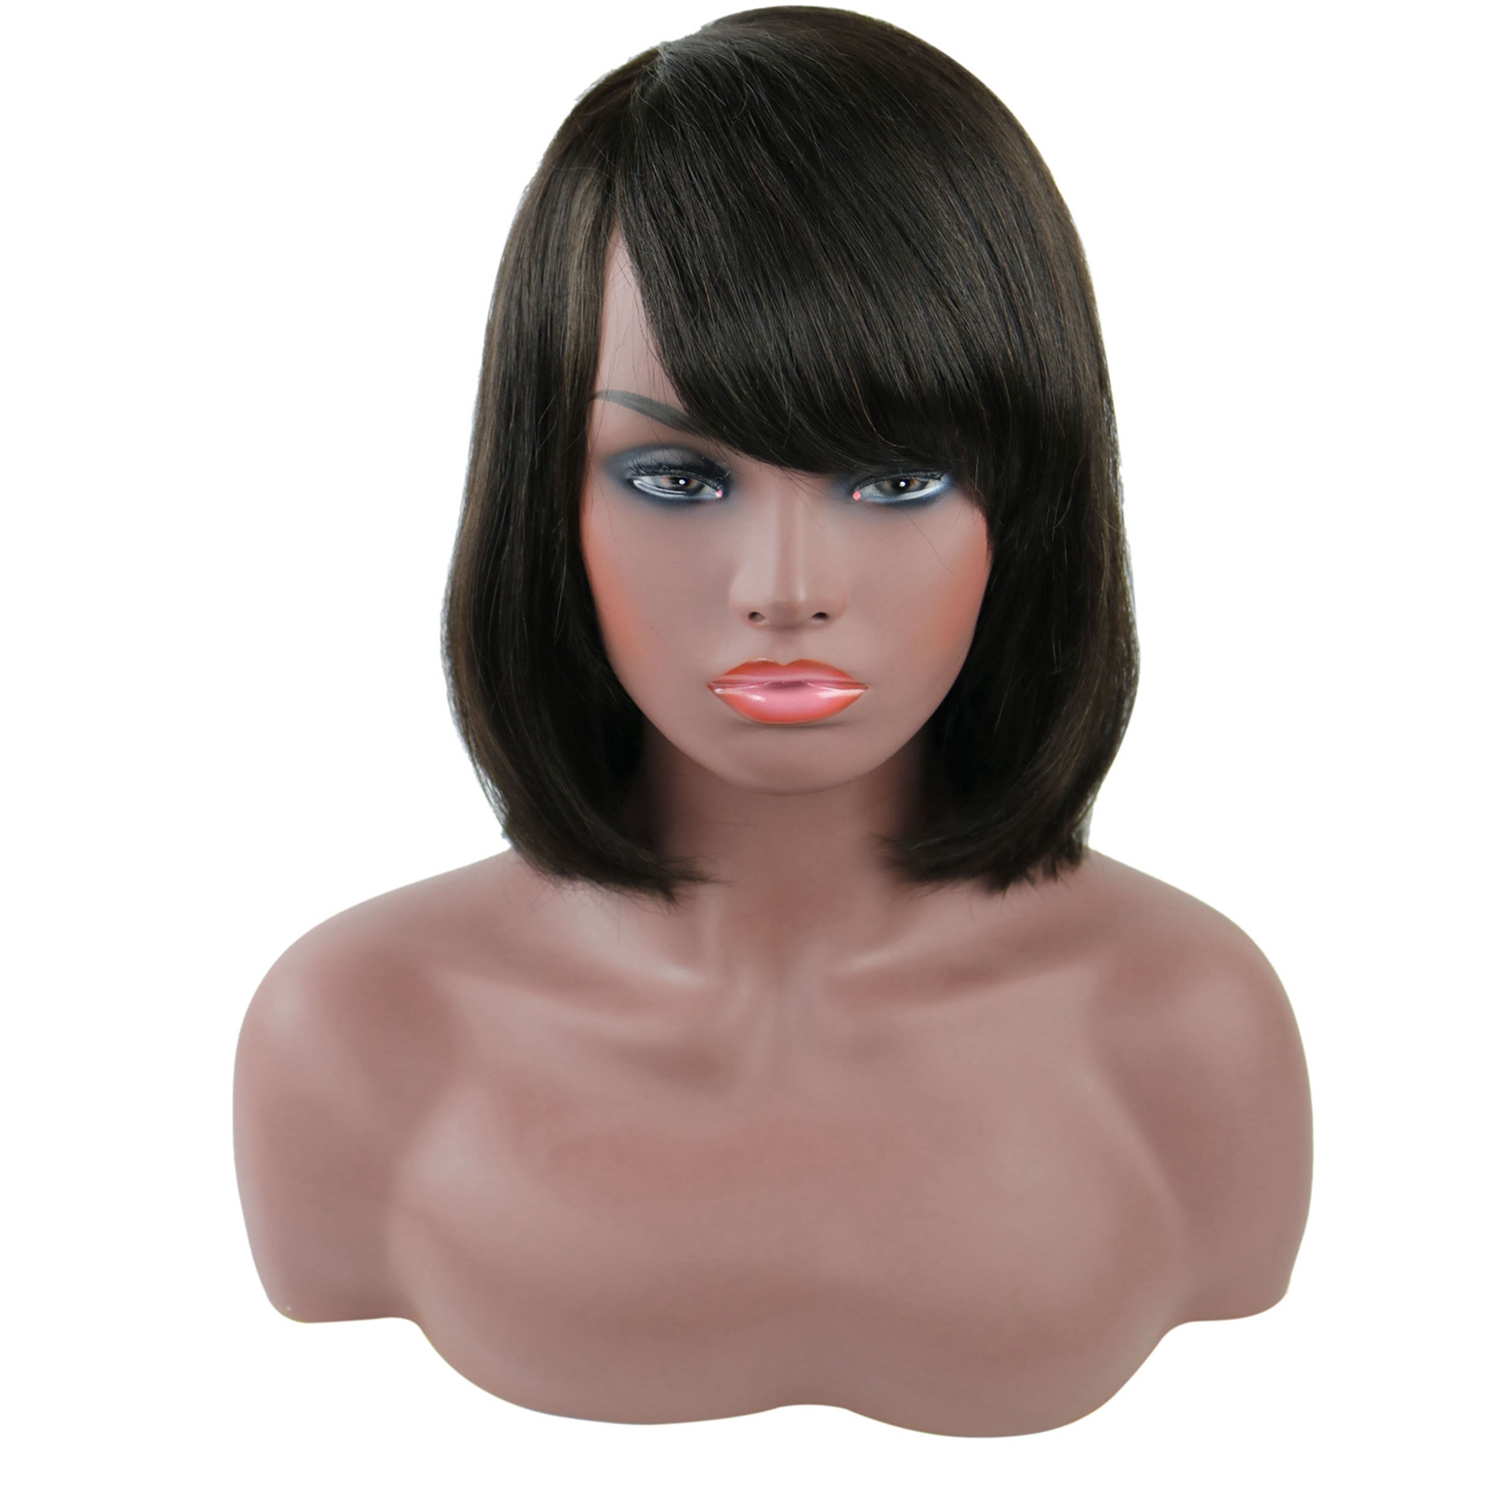 Taraji Henson Bob Hair Style Wigs Human Hair Straight Capless 10 Inches 120% Wigs